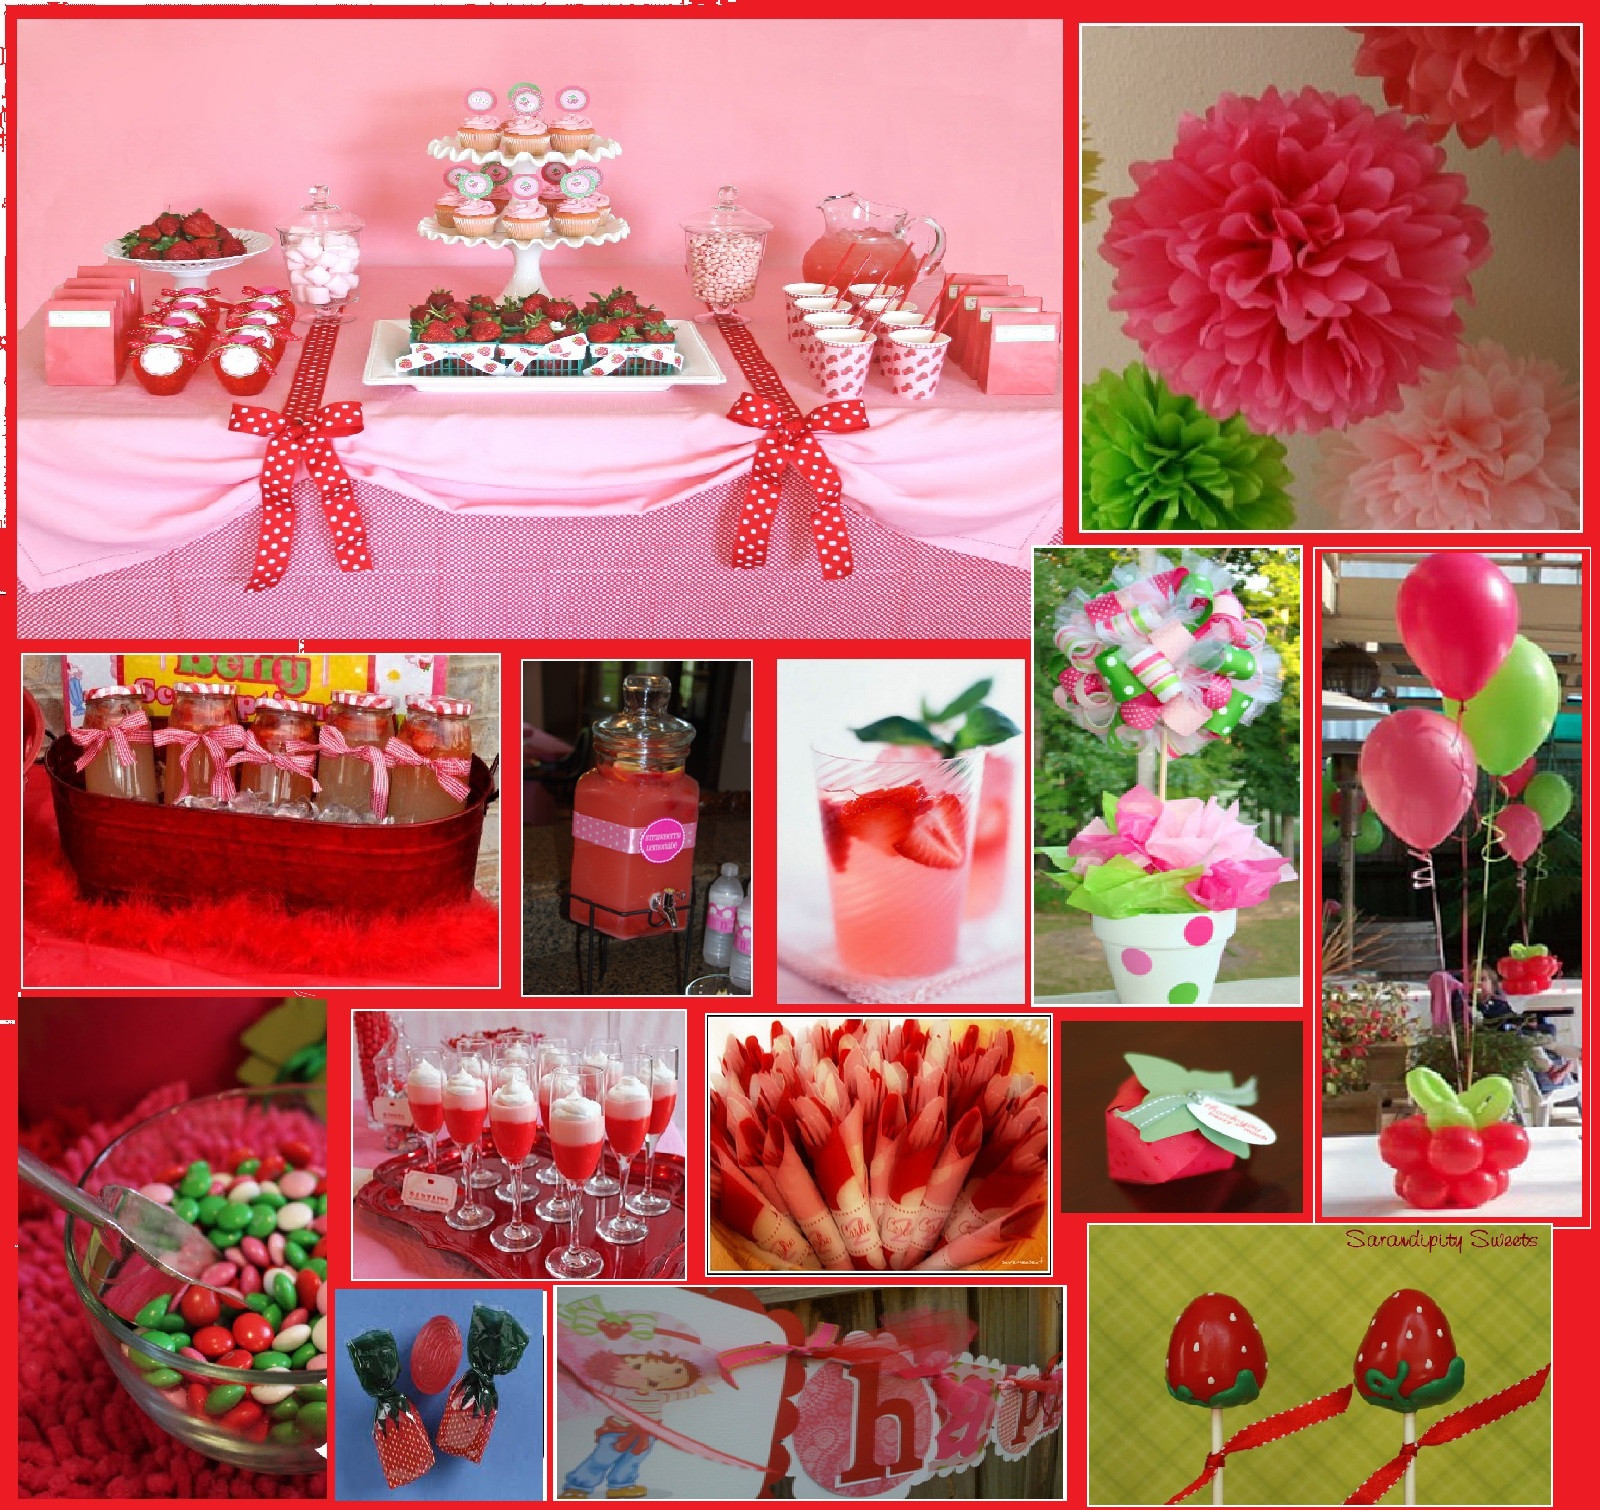 Strawberry Shortcake Birthday Decorations
 And Everything Sweet Strawberry Shortcake Cake and Party